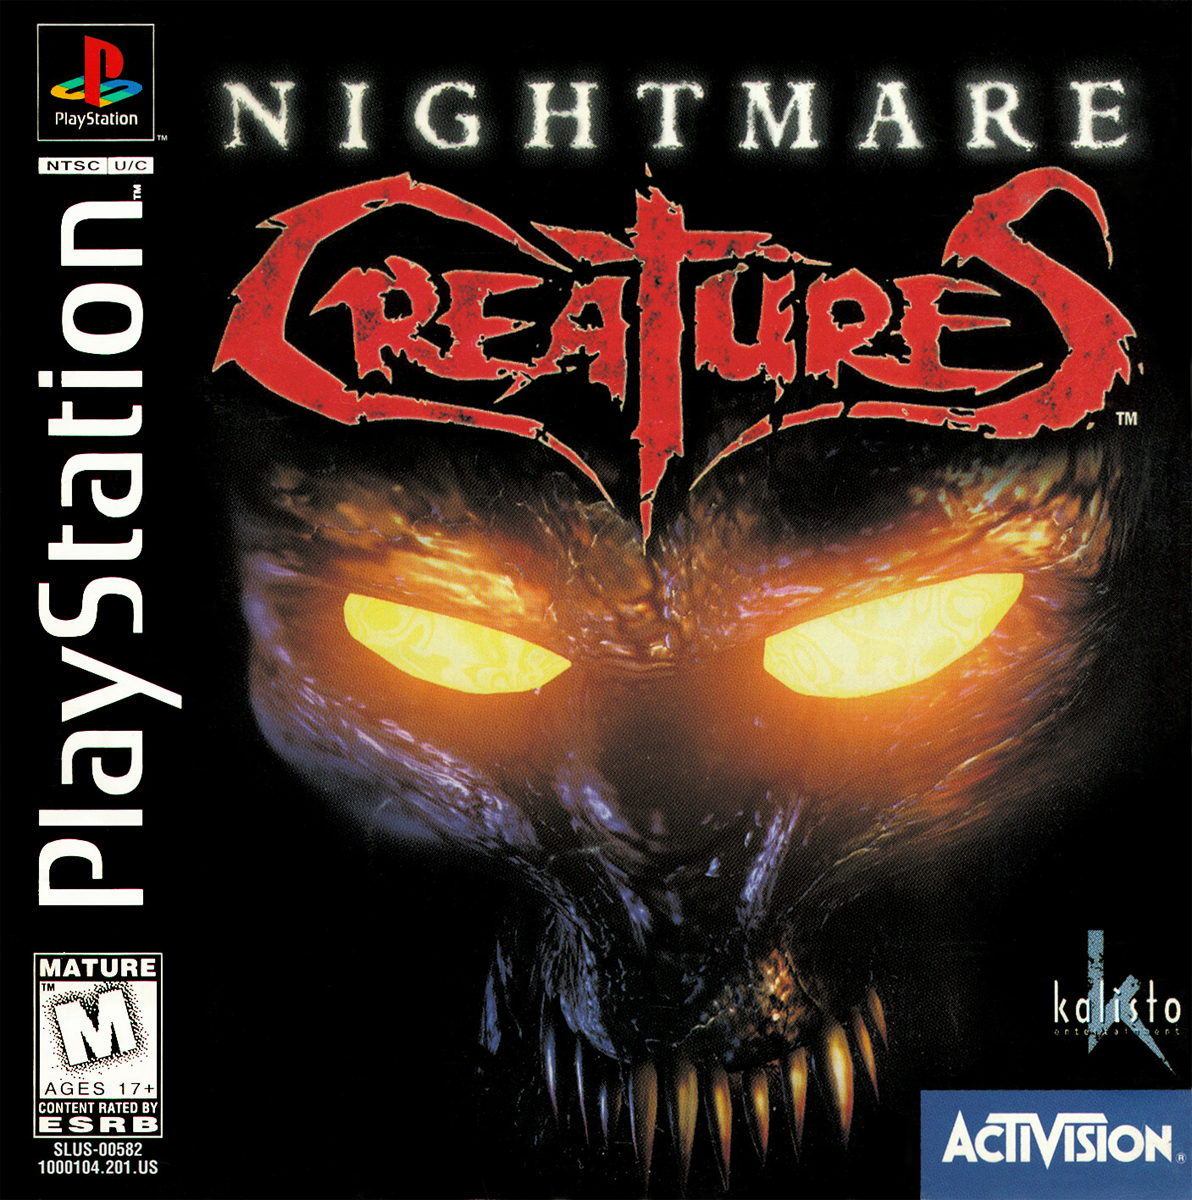 Nightmare Creature 2 Pc Download